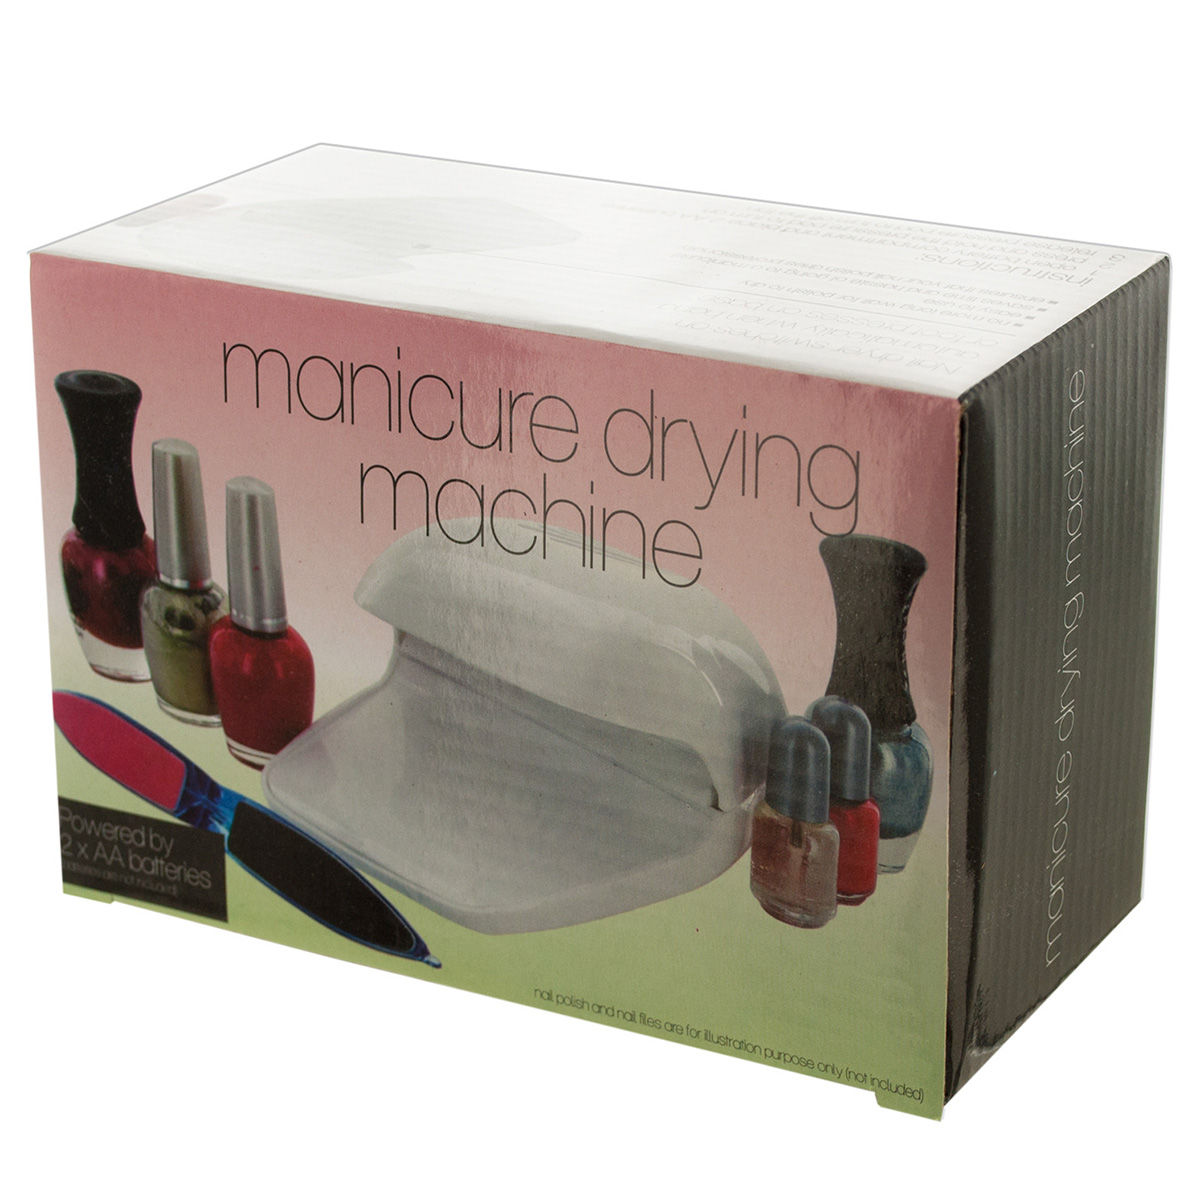 Manicure Drying Machine